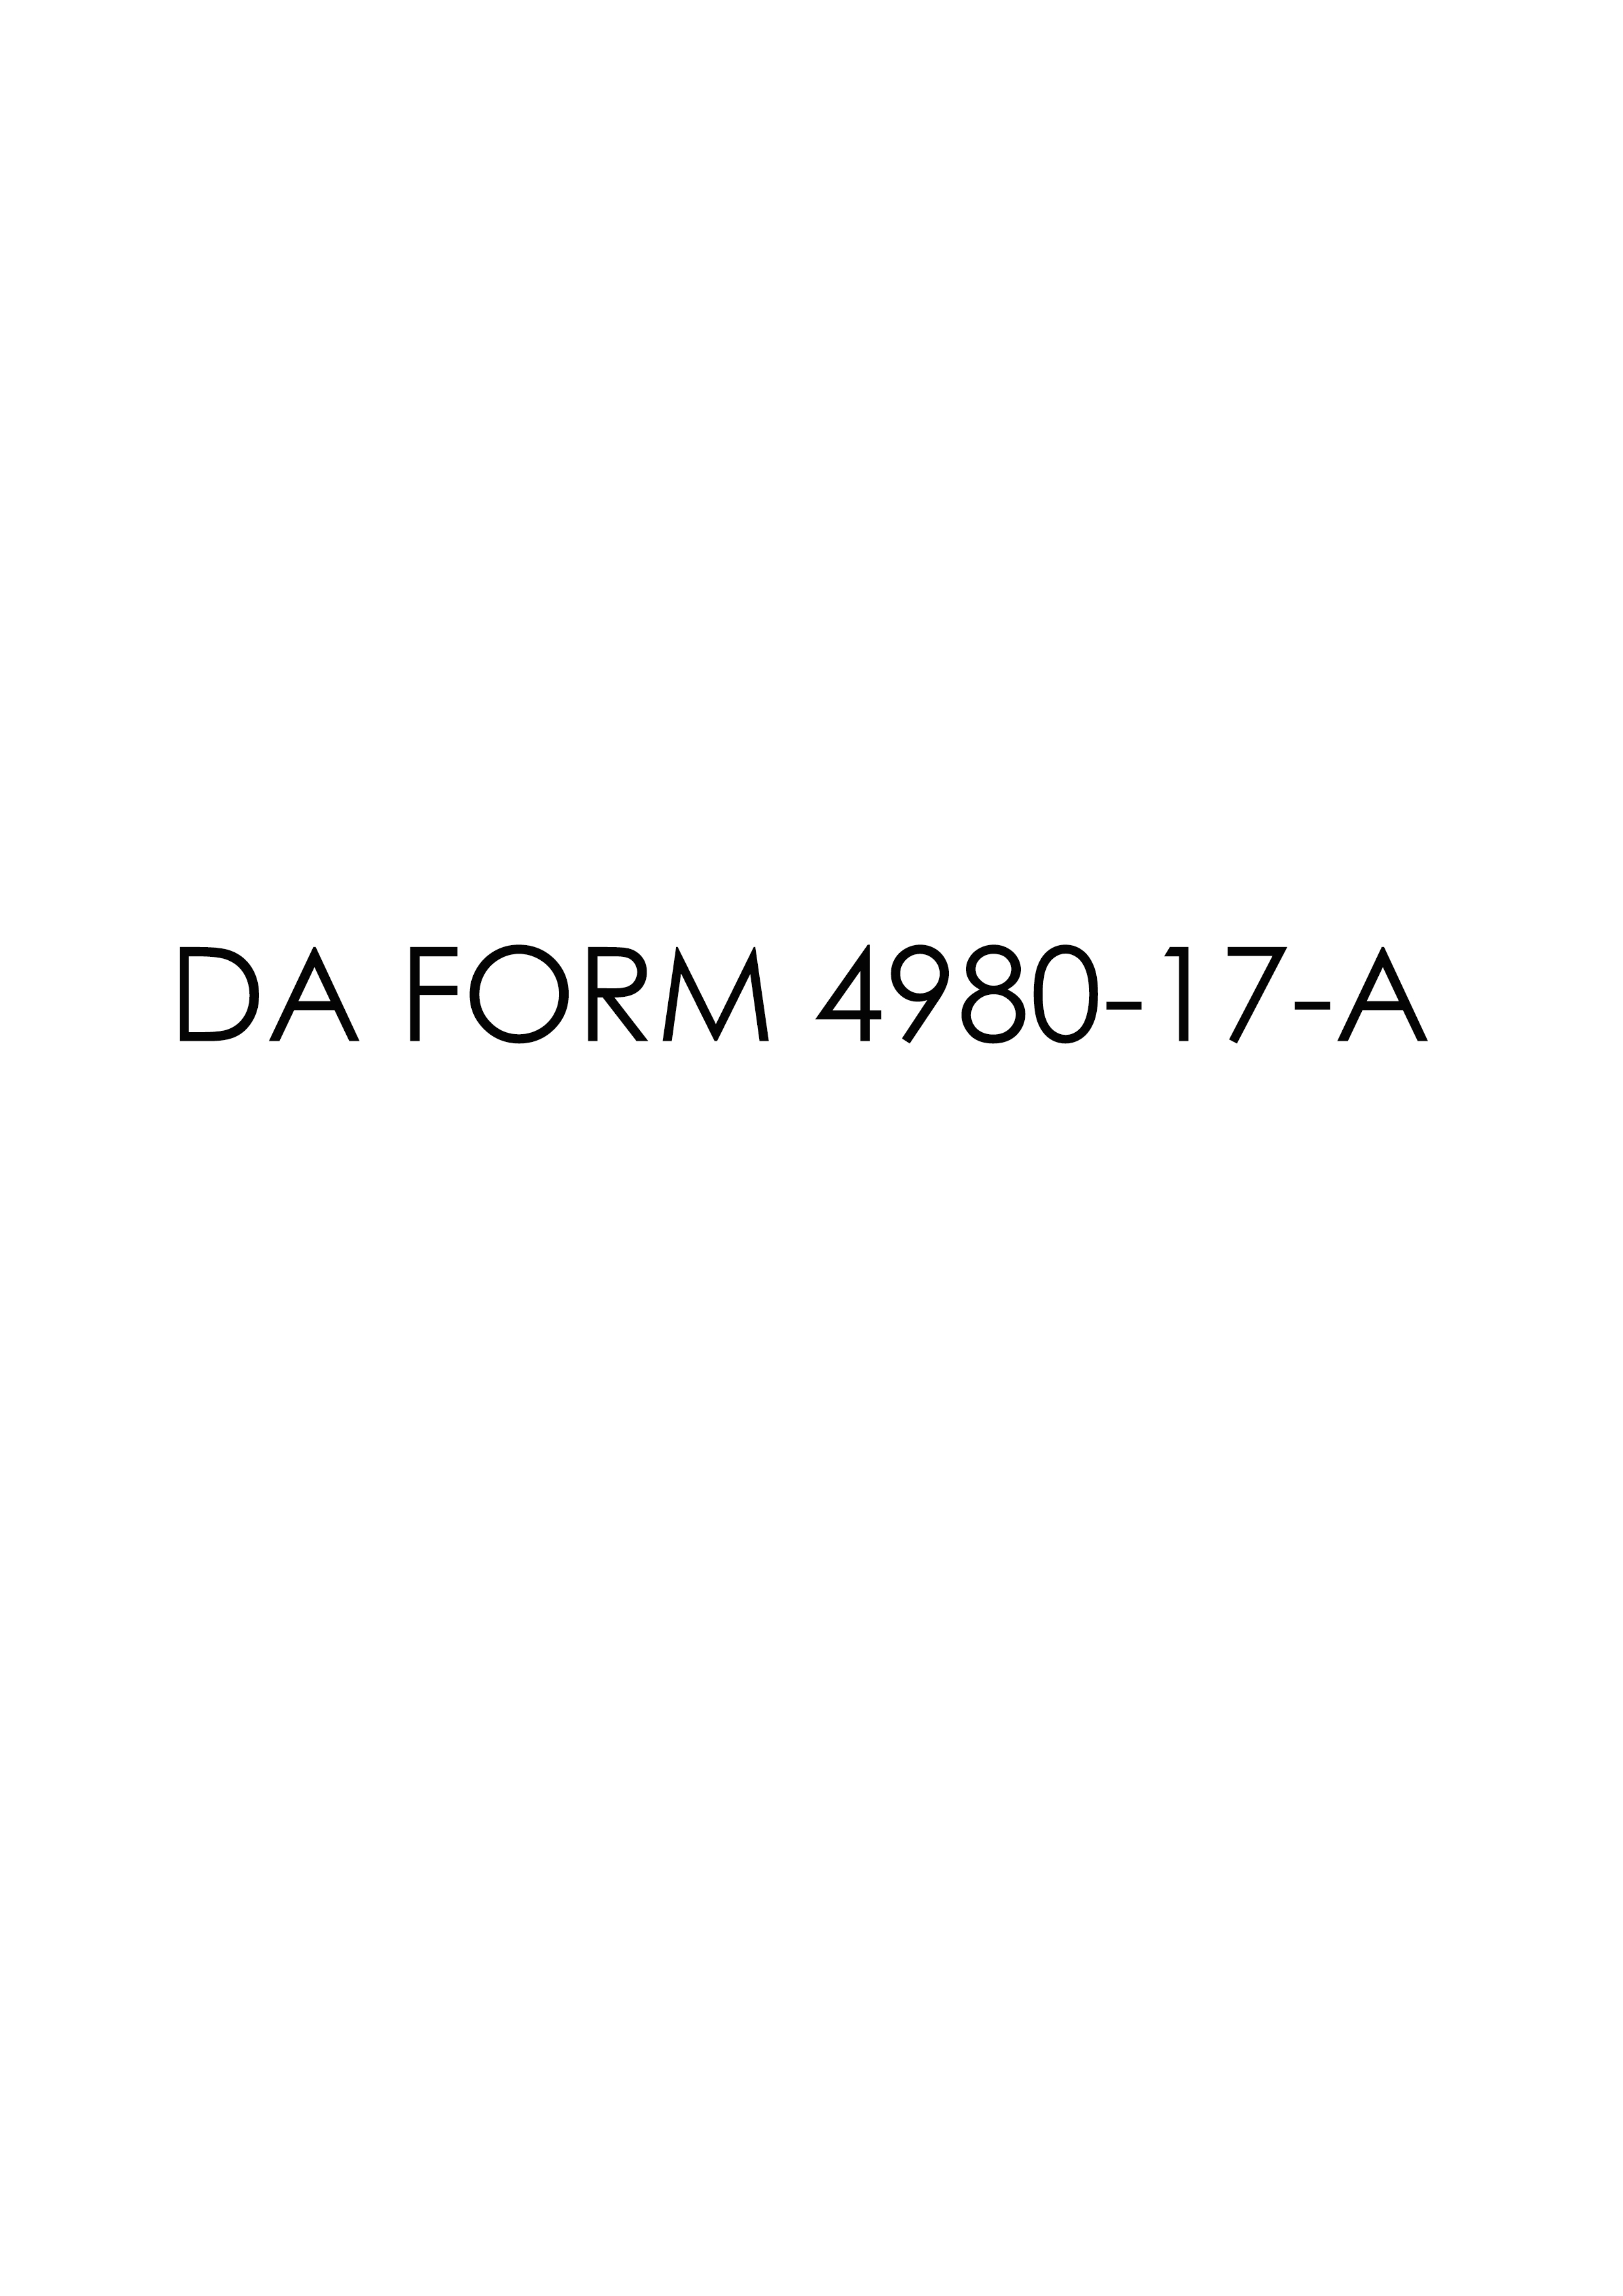 Download Fillable da Form 4980-17-A